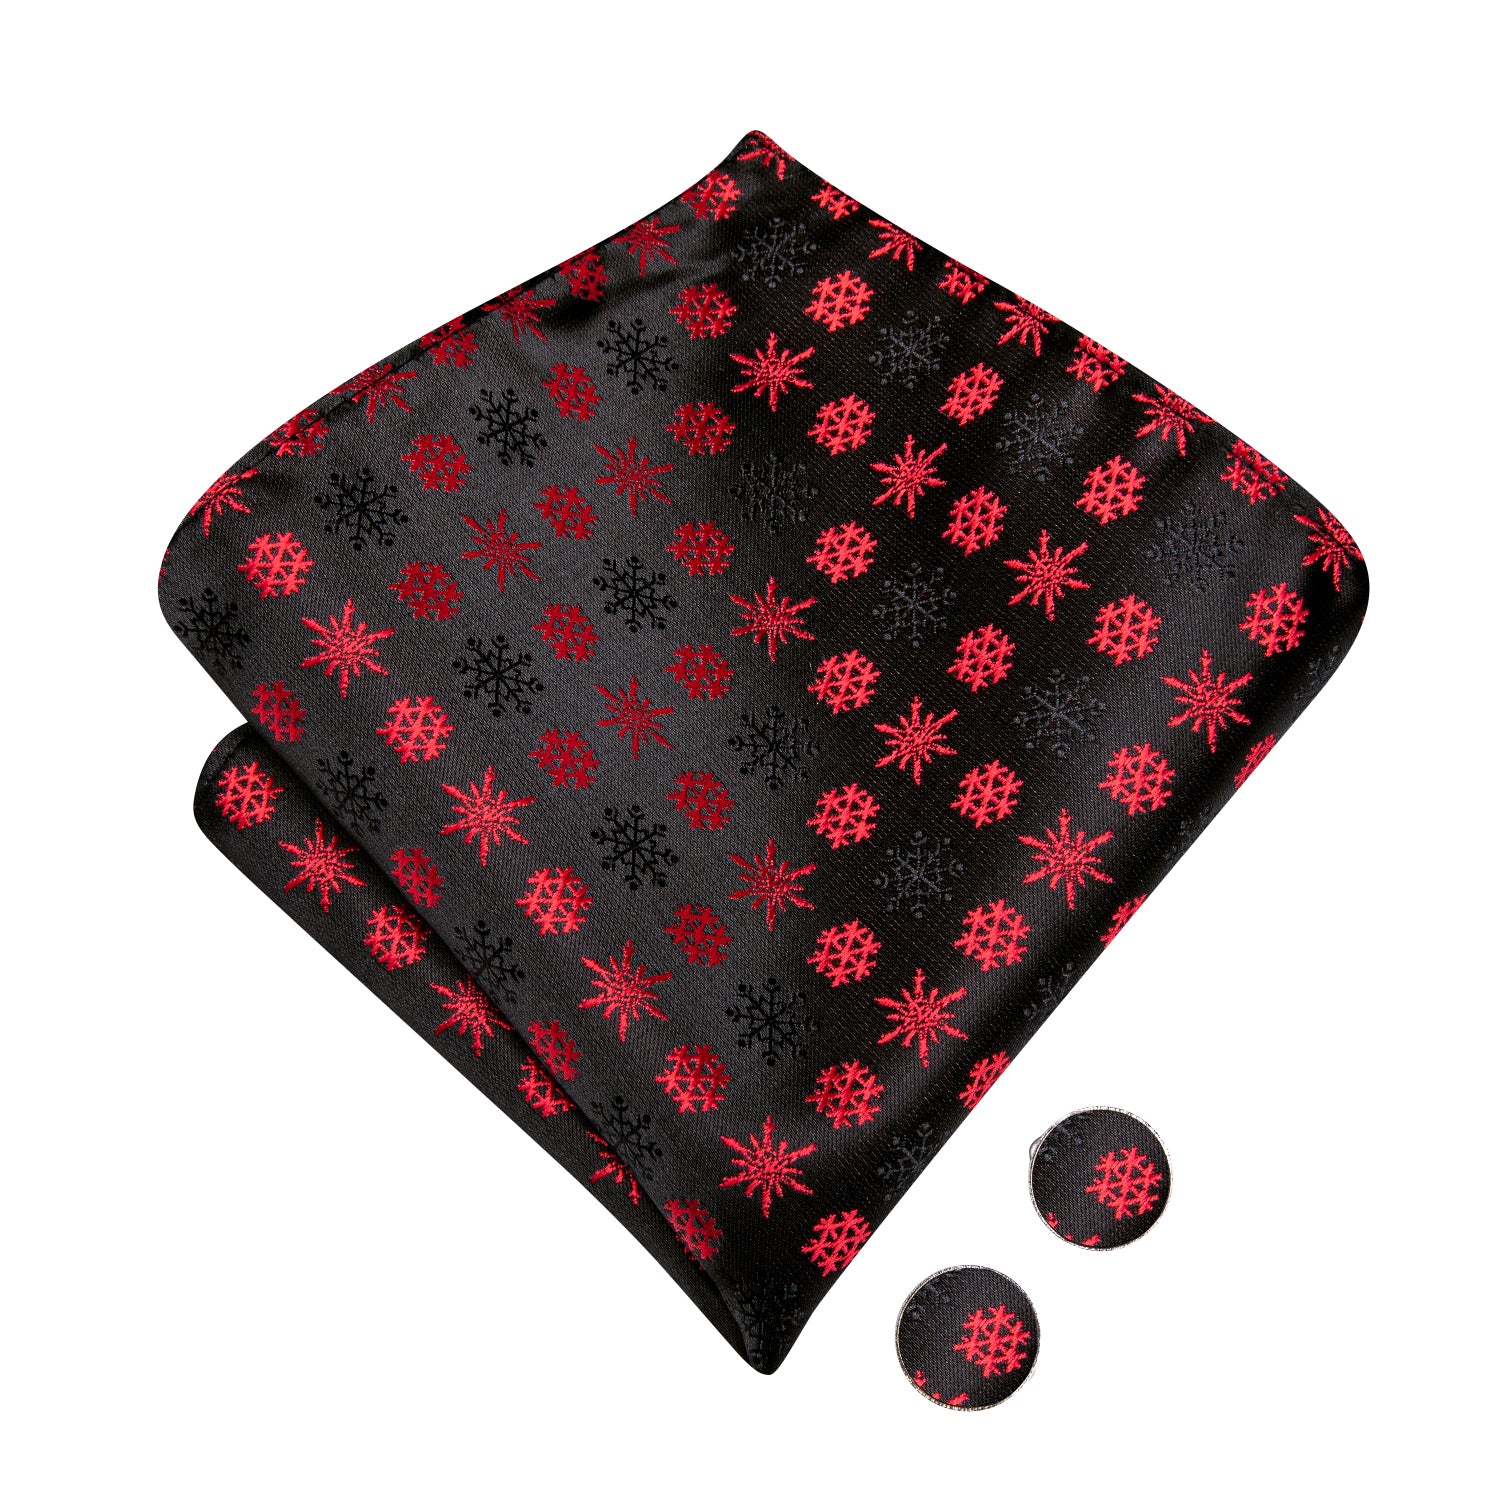 Christmas Black Red Snowflake Pre-tied Bow Tie Hanky Cufflinks Set